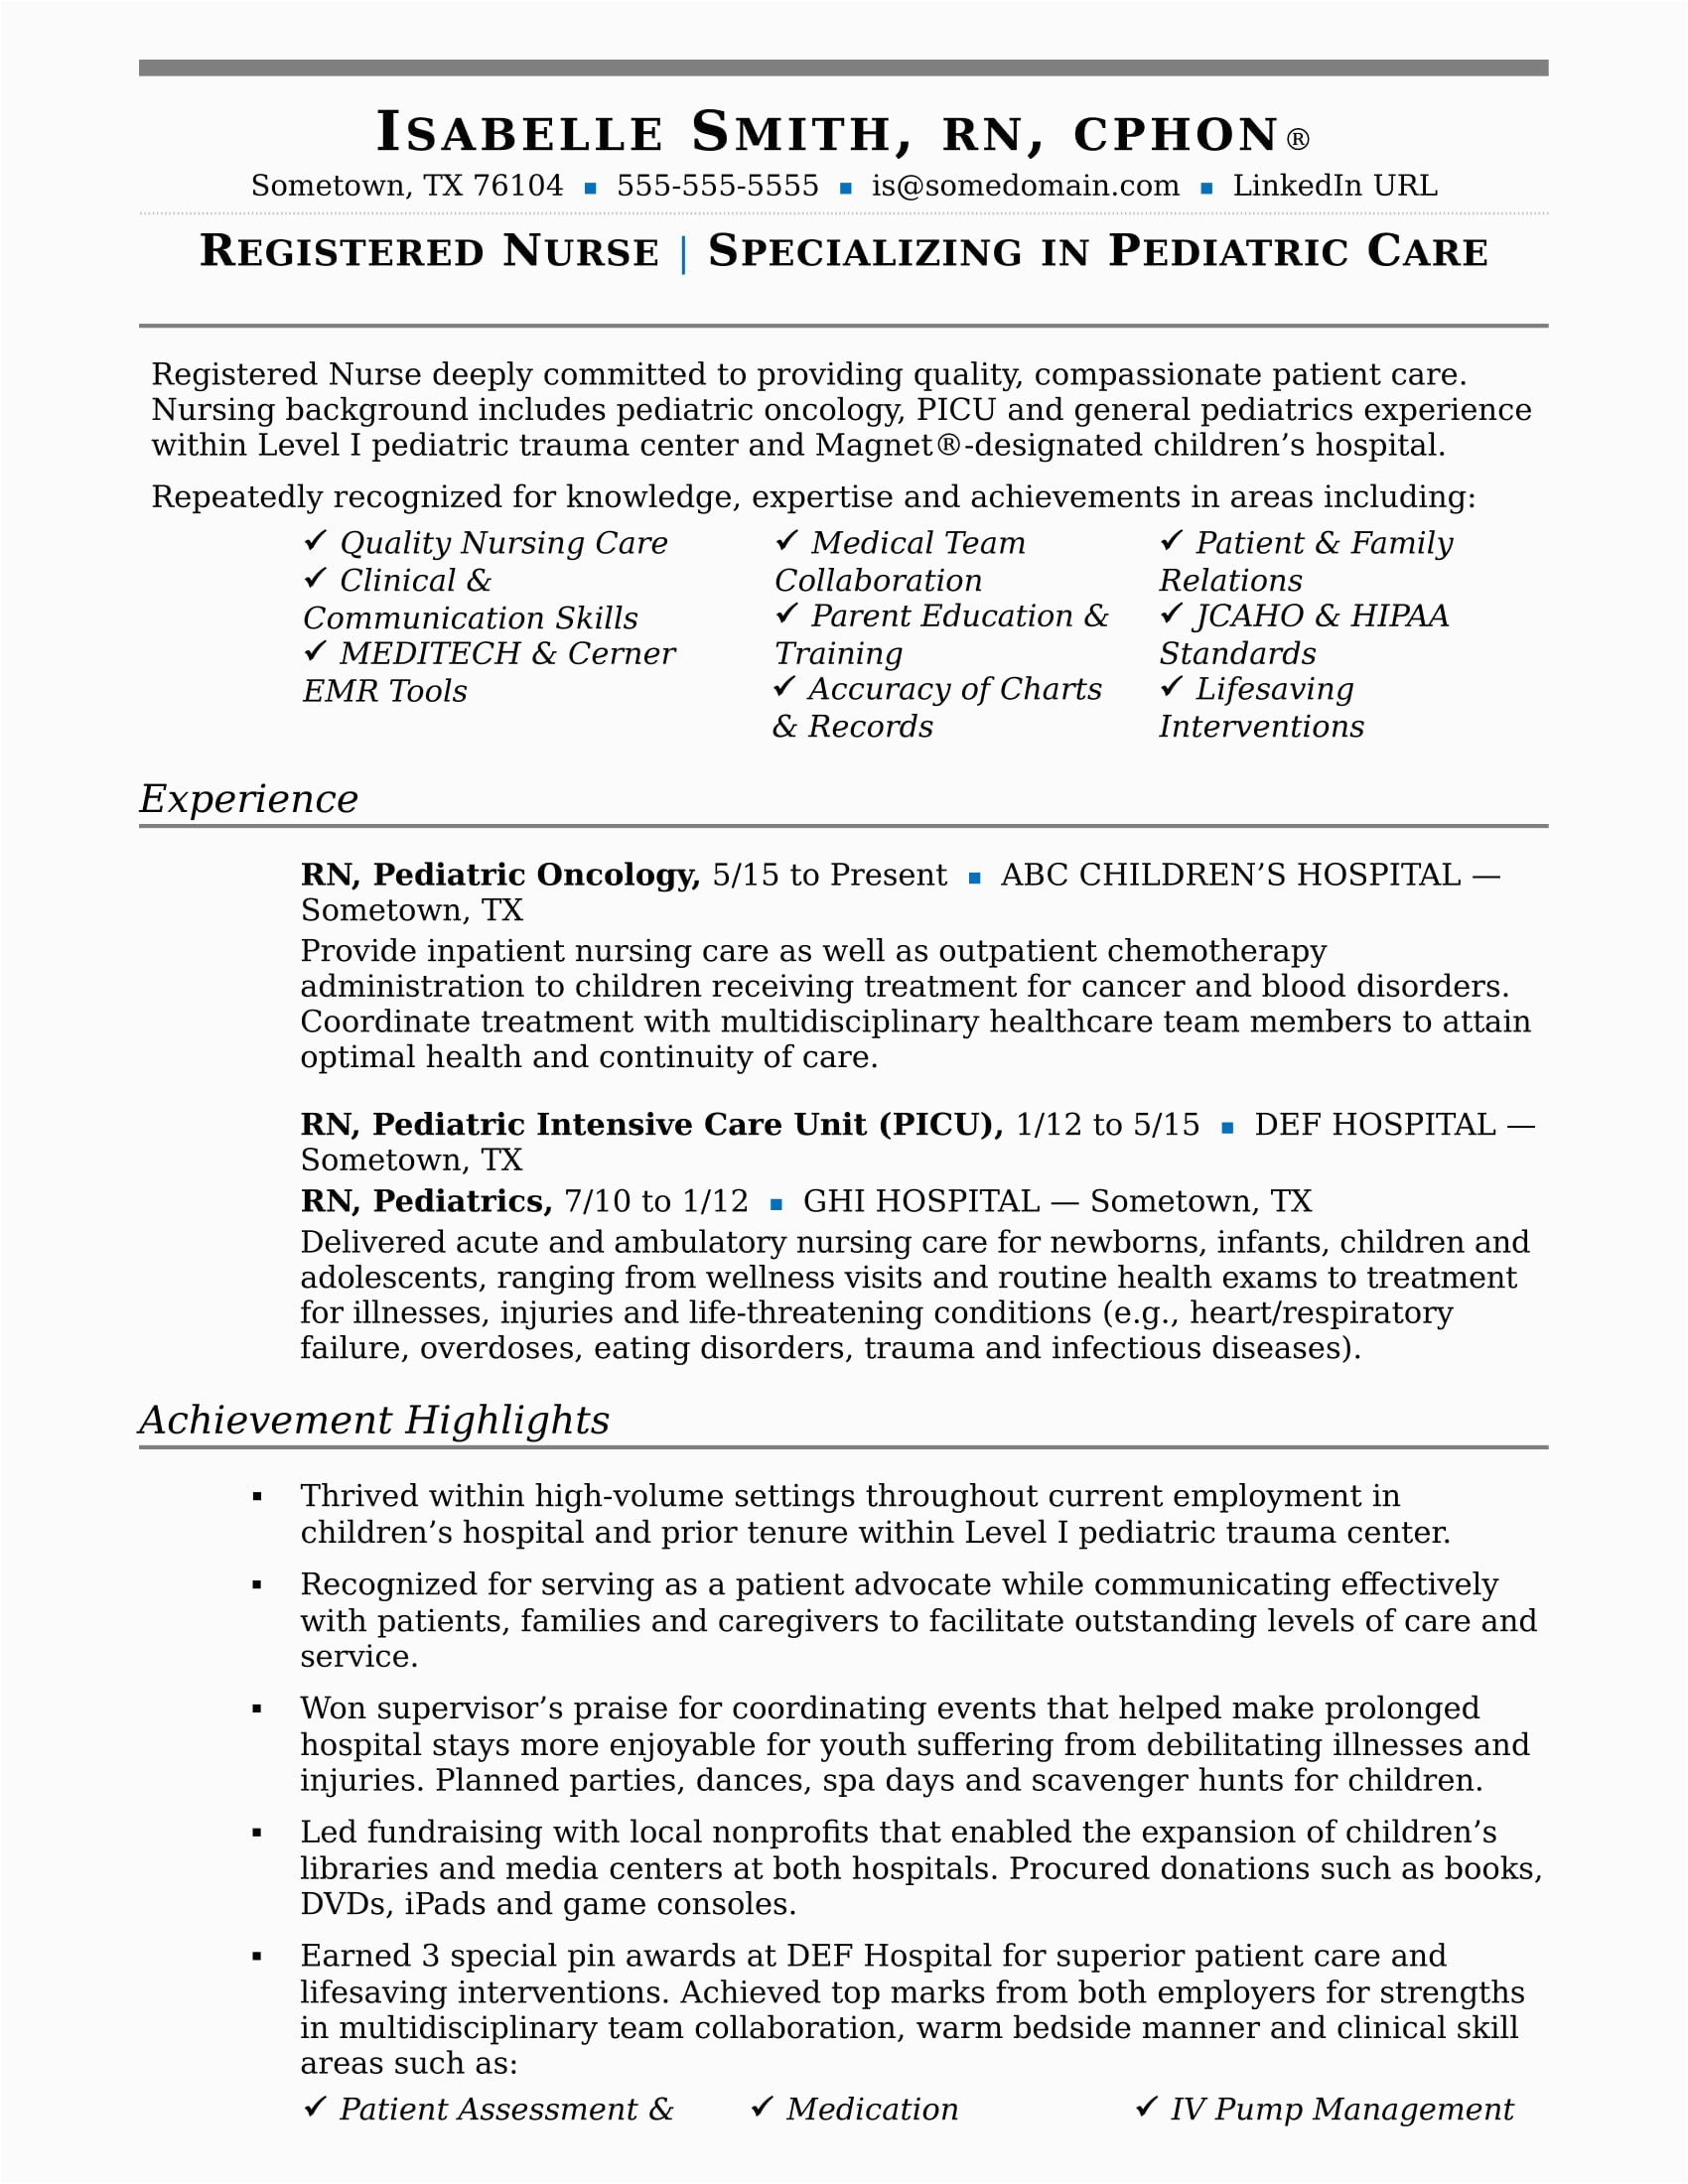 Sample Resume for Registered Nurse with Experience Nurse Resume Sample